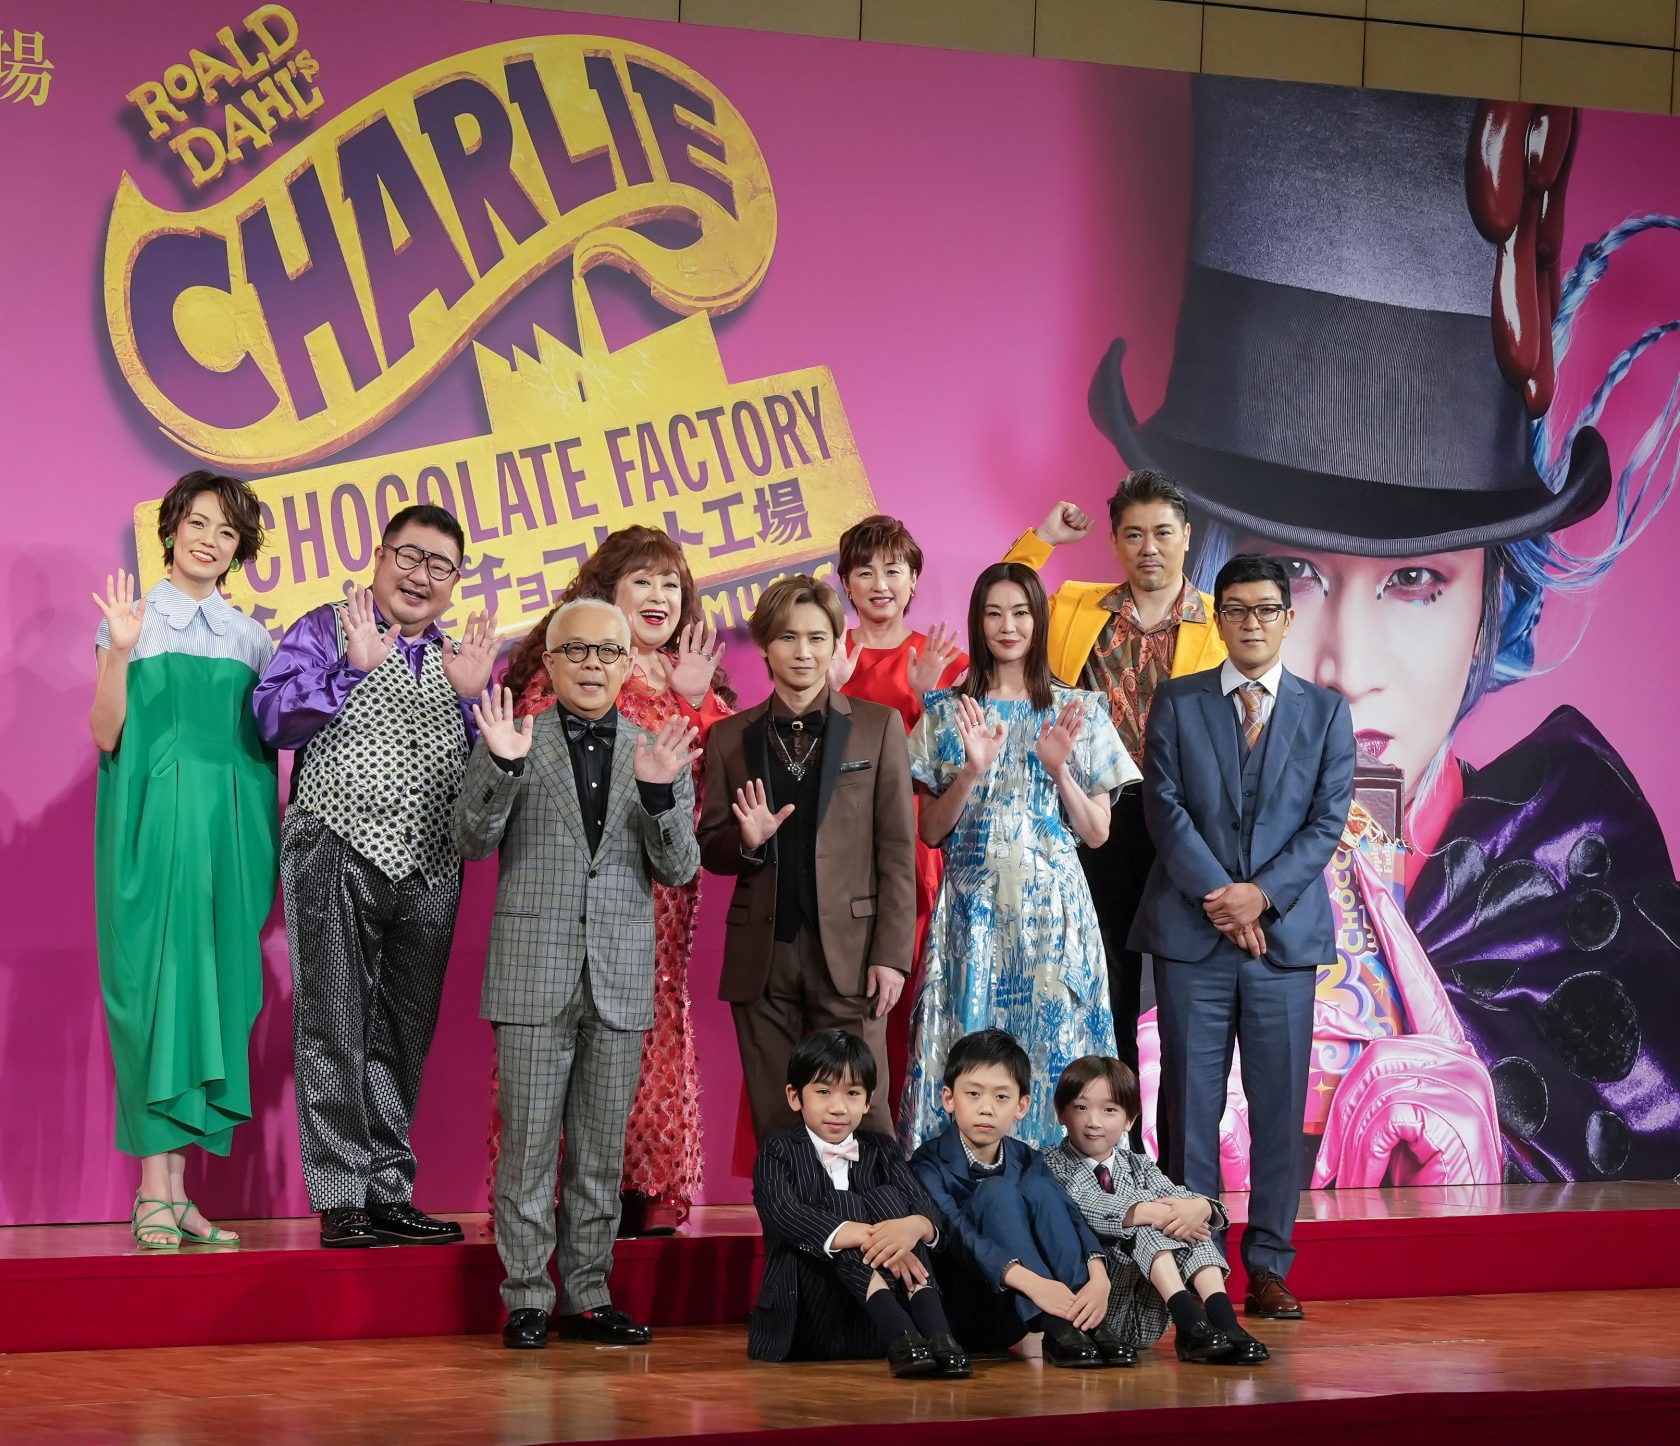 KinKi Kids堂本光一 主演ミュージカル「チャーリーとチョコレート工場」の製作を発表